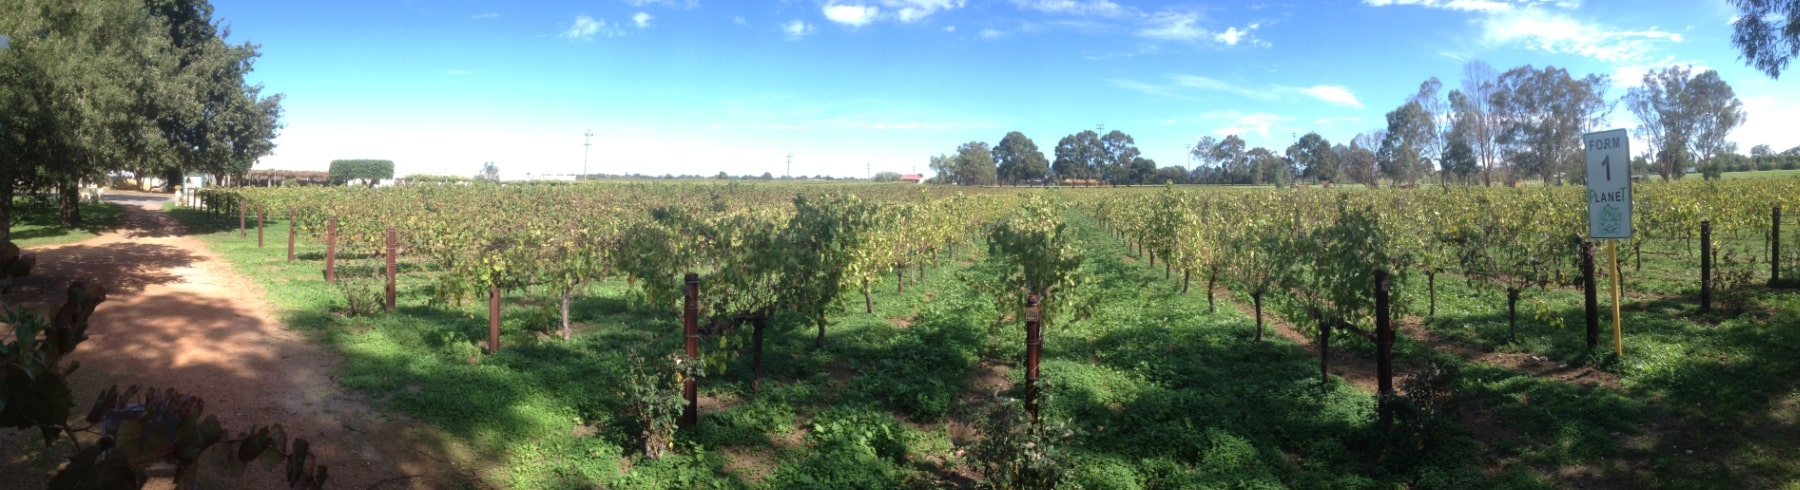 Organic Wines - Perth